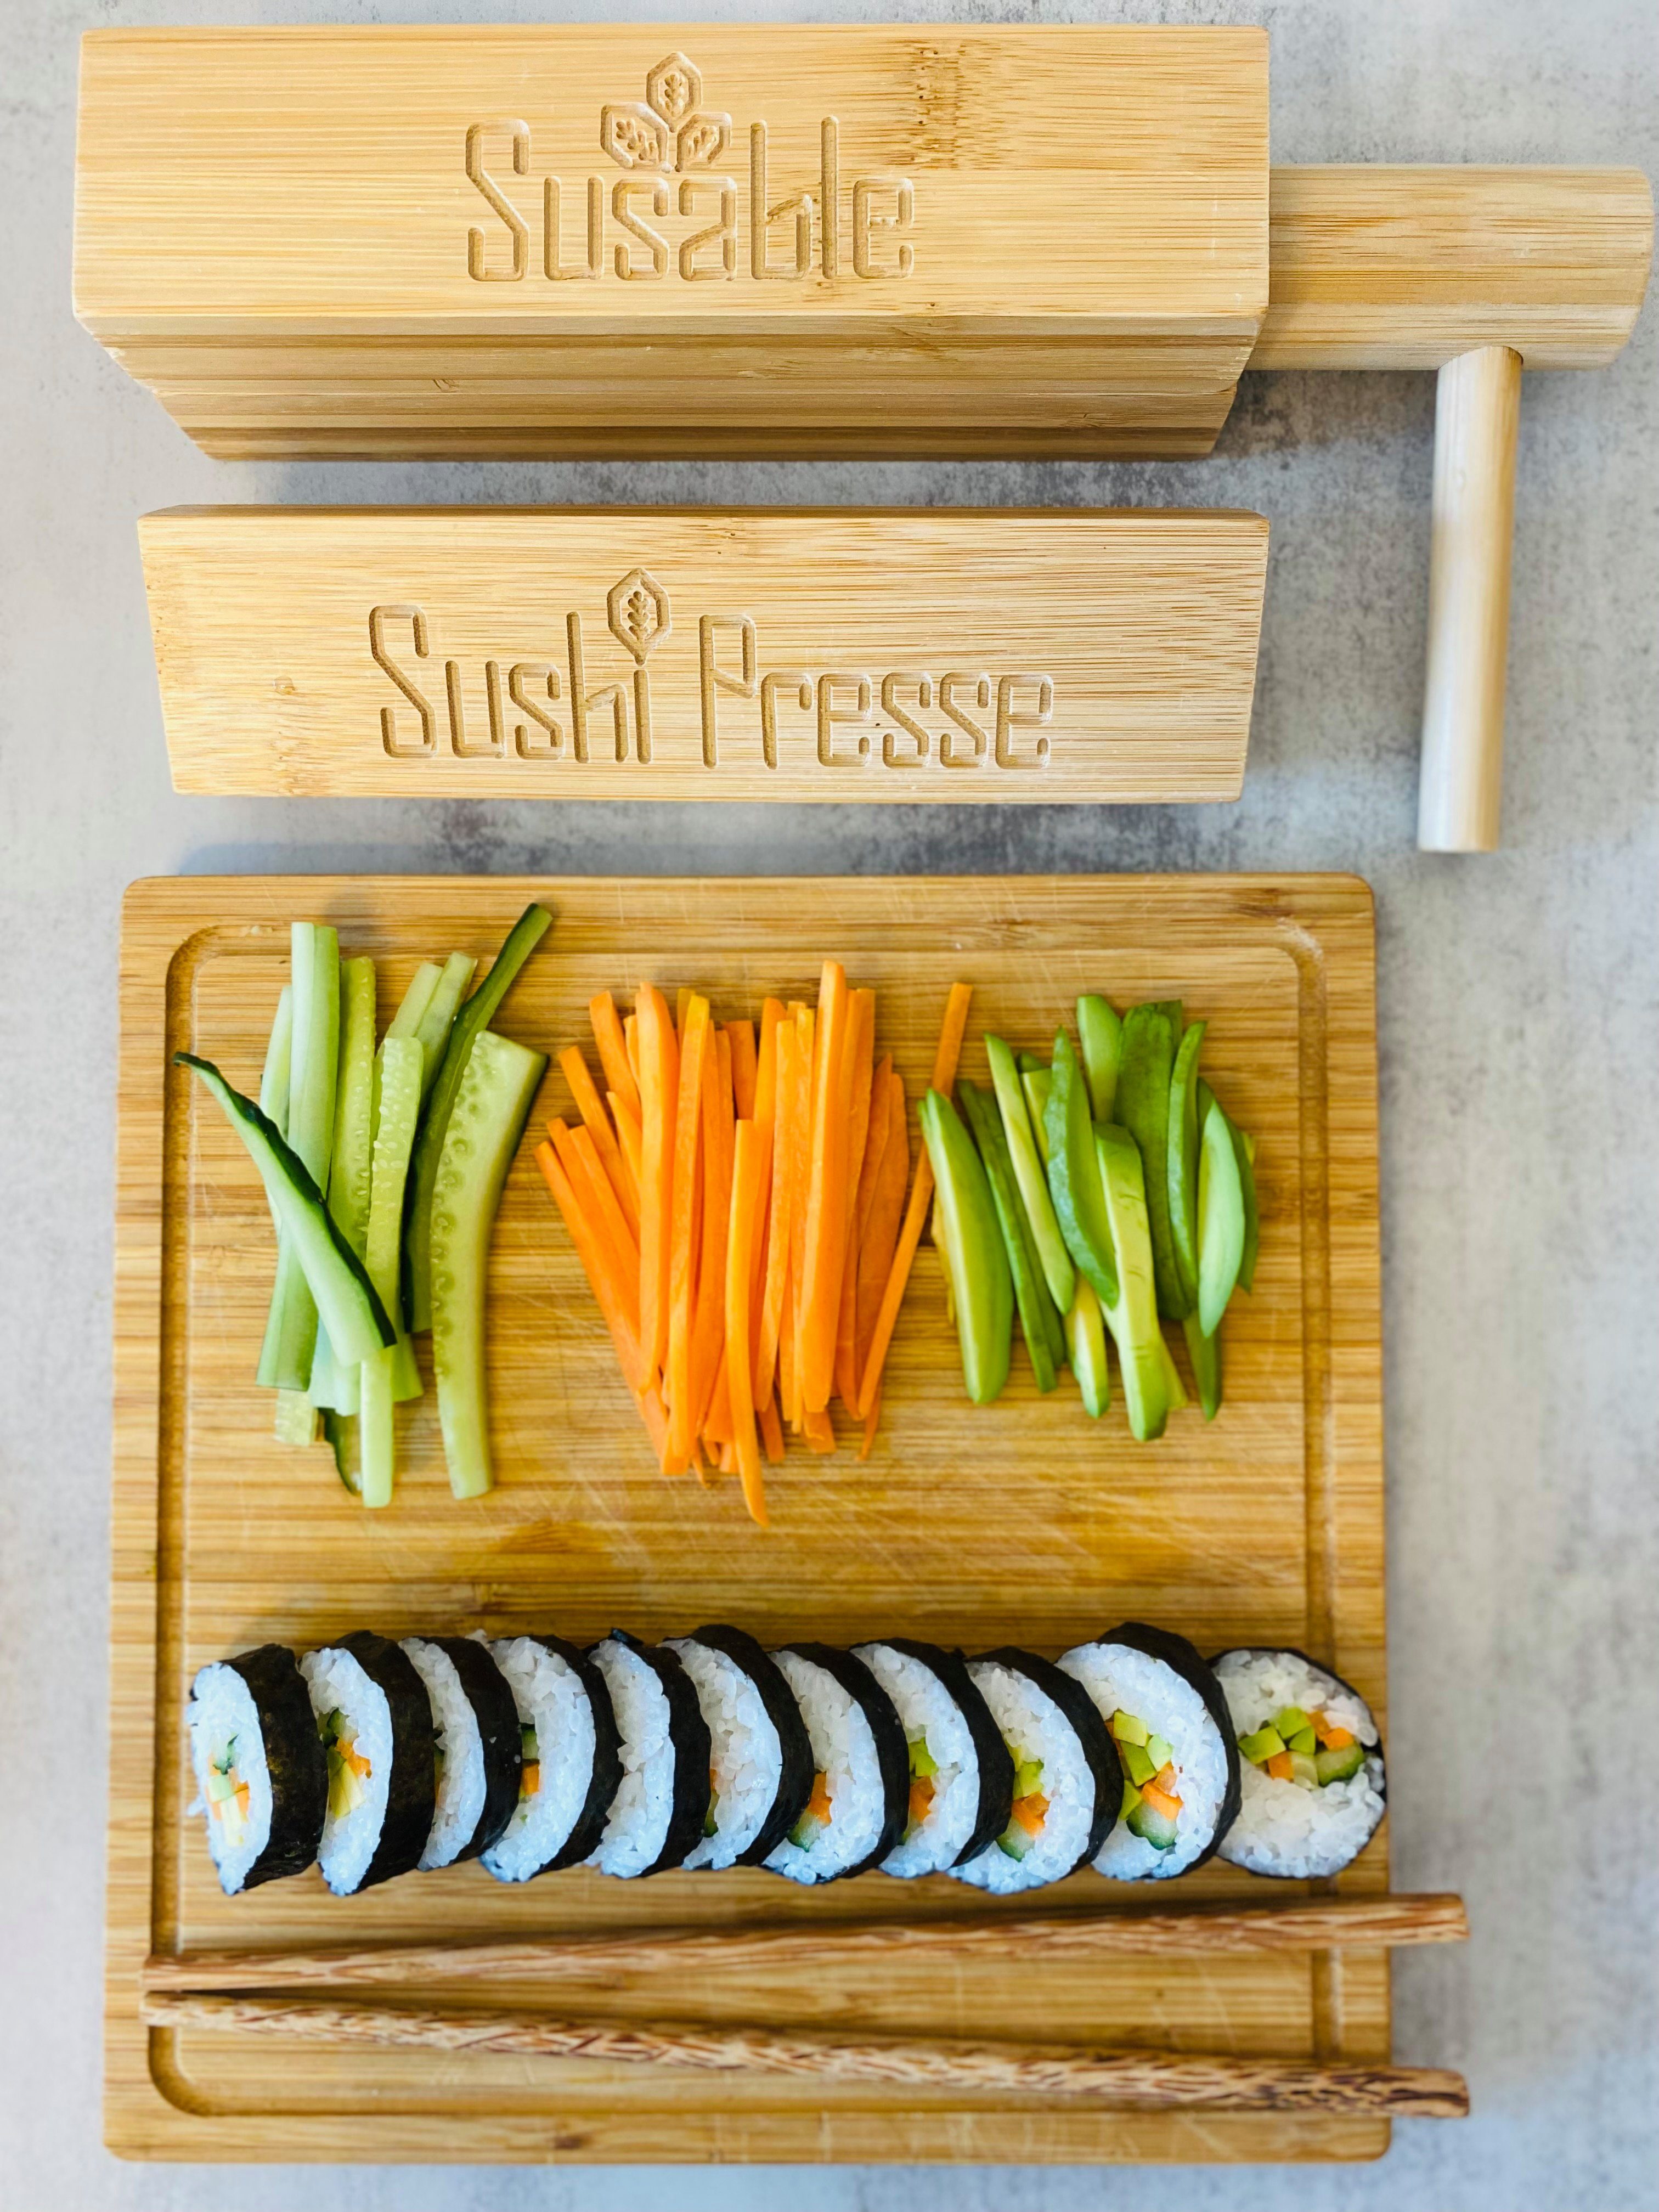 Susable Sushi-Roller Bambus Maki Roller, Nigiri Sushi Kit Maker Öko-Freundlich & DIY 